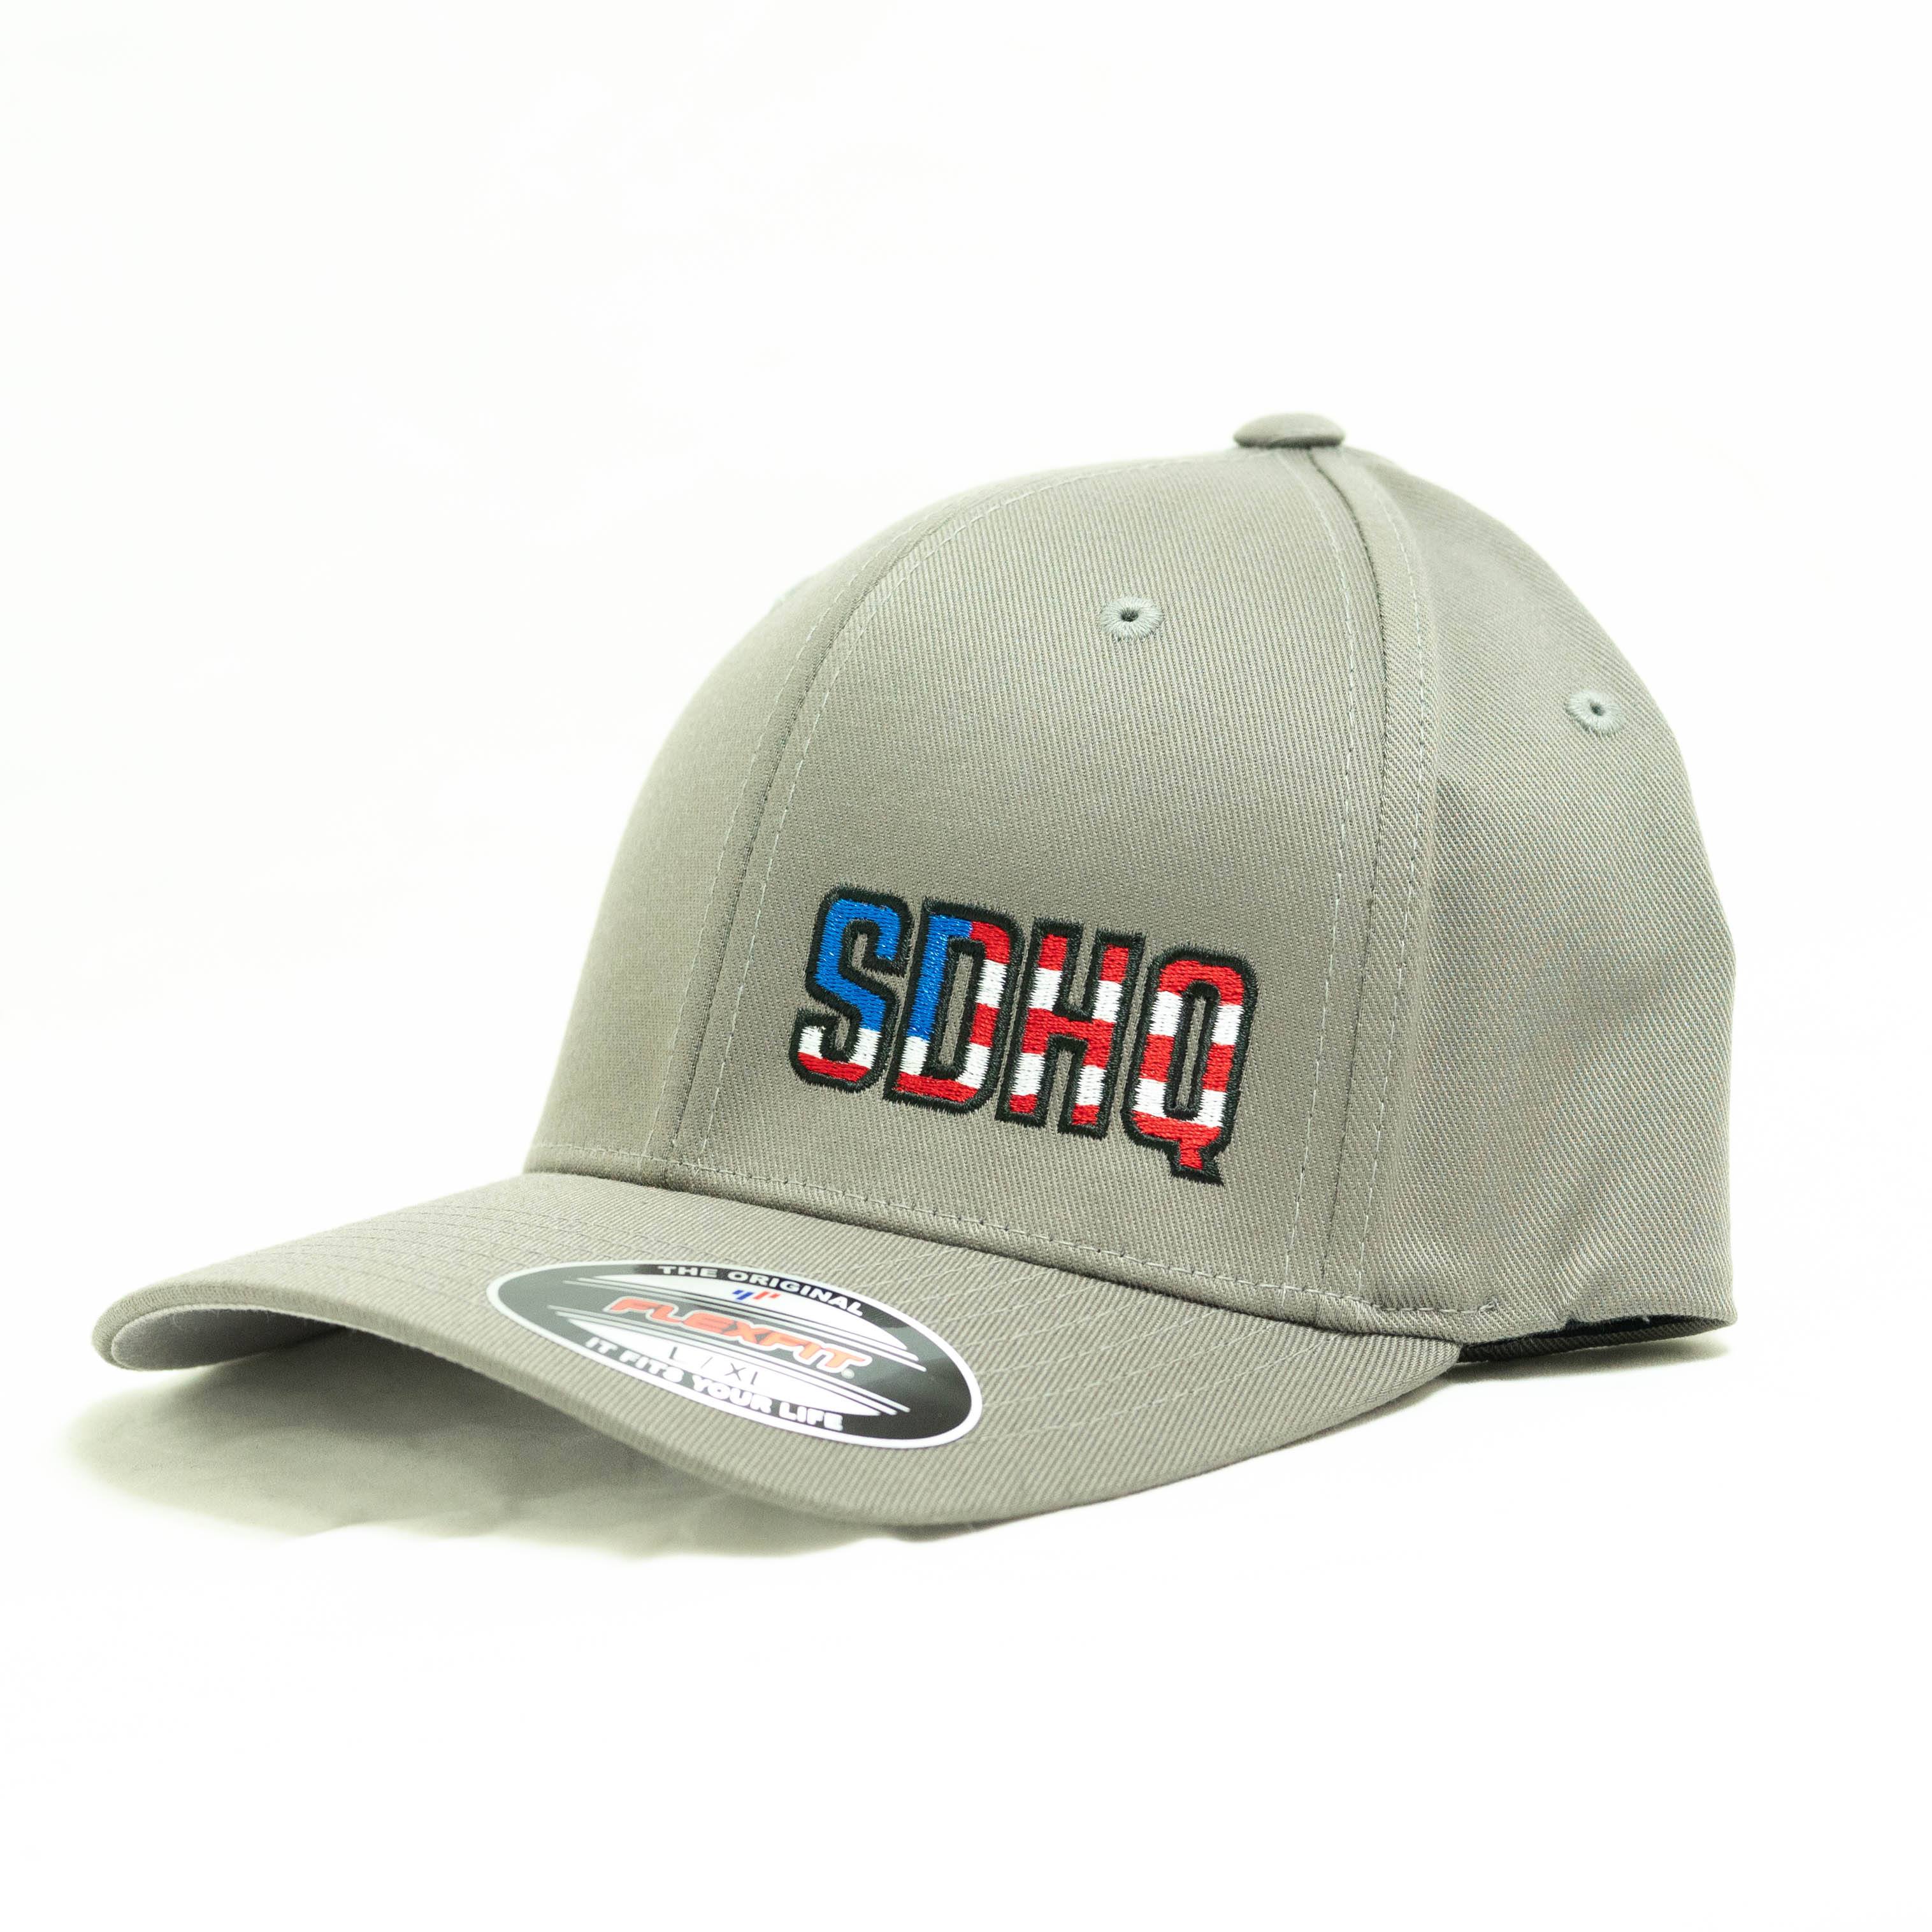 SDHQ USA Gray Flex Fit Hat Apparel SDHQ Off Road